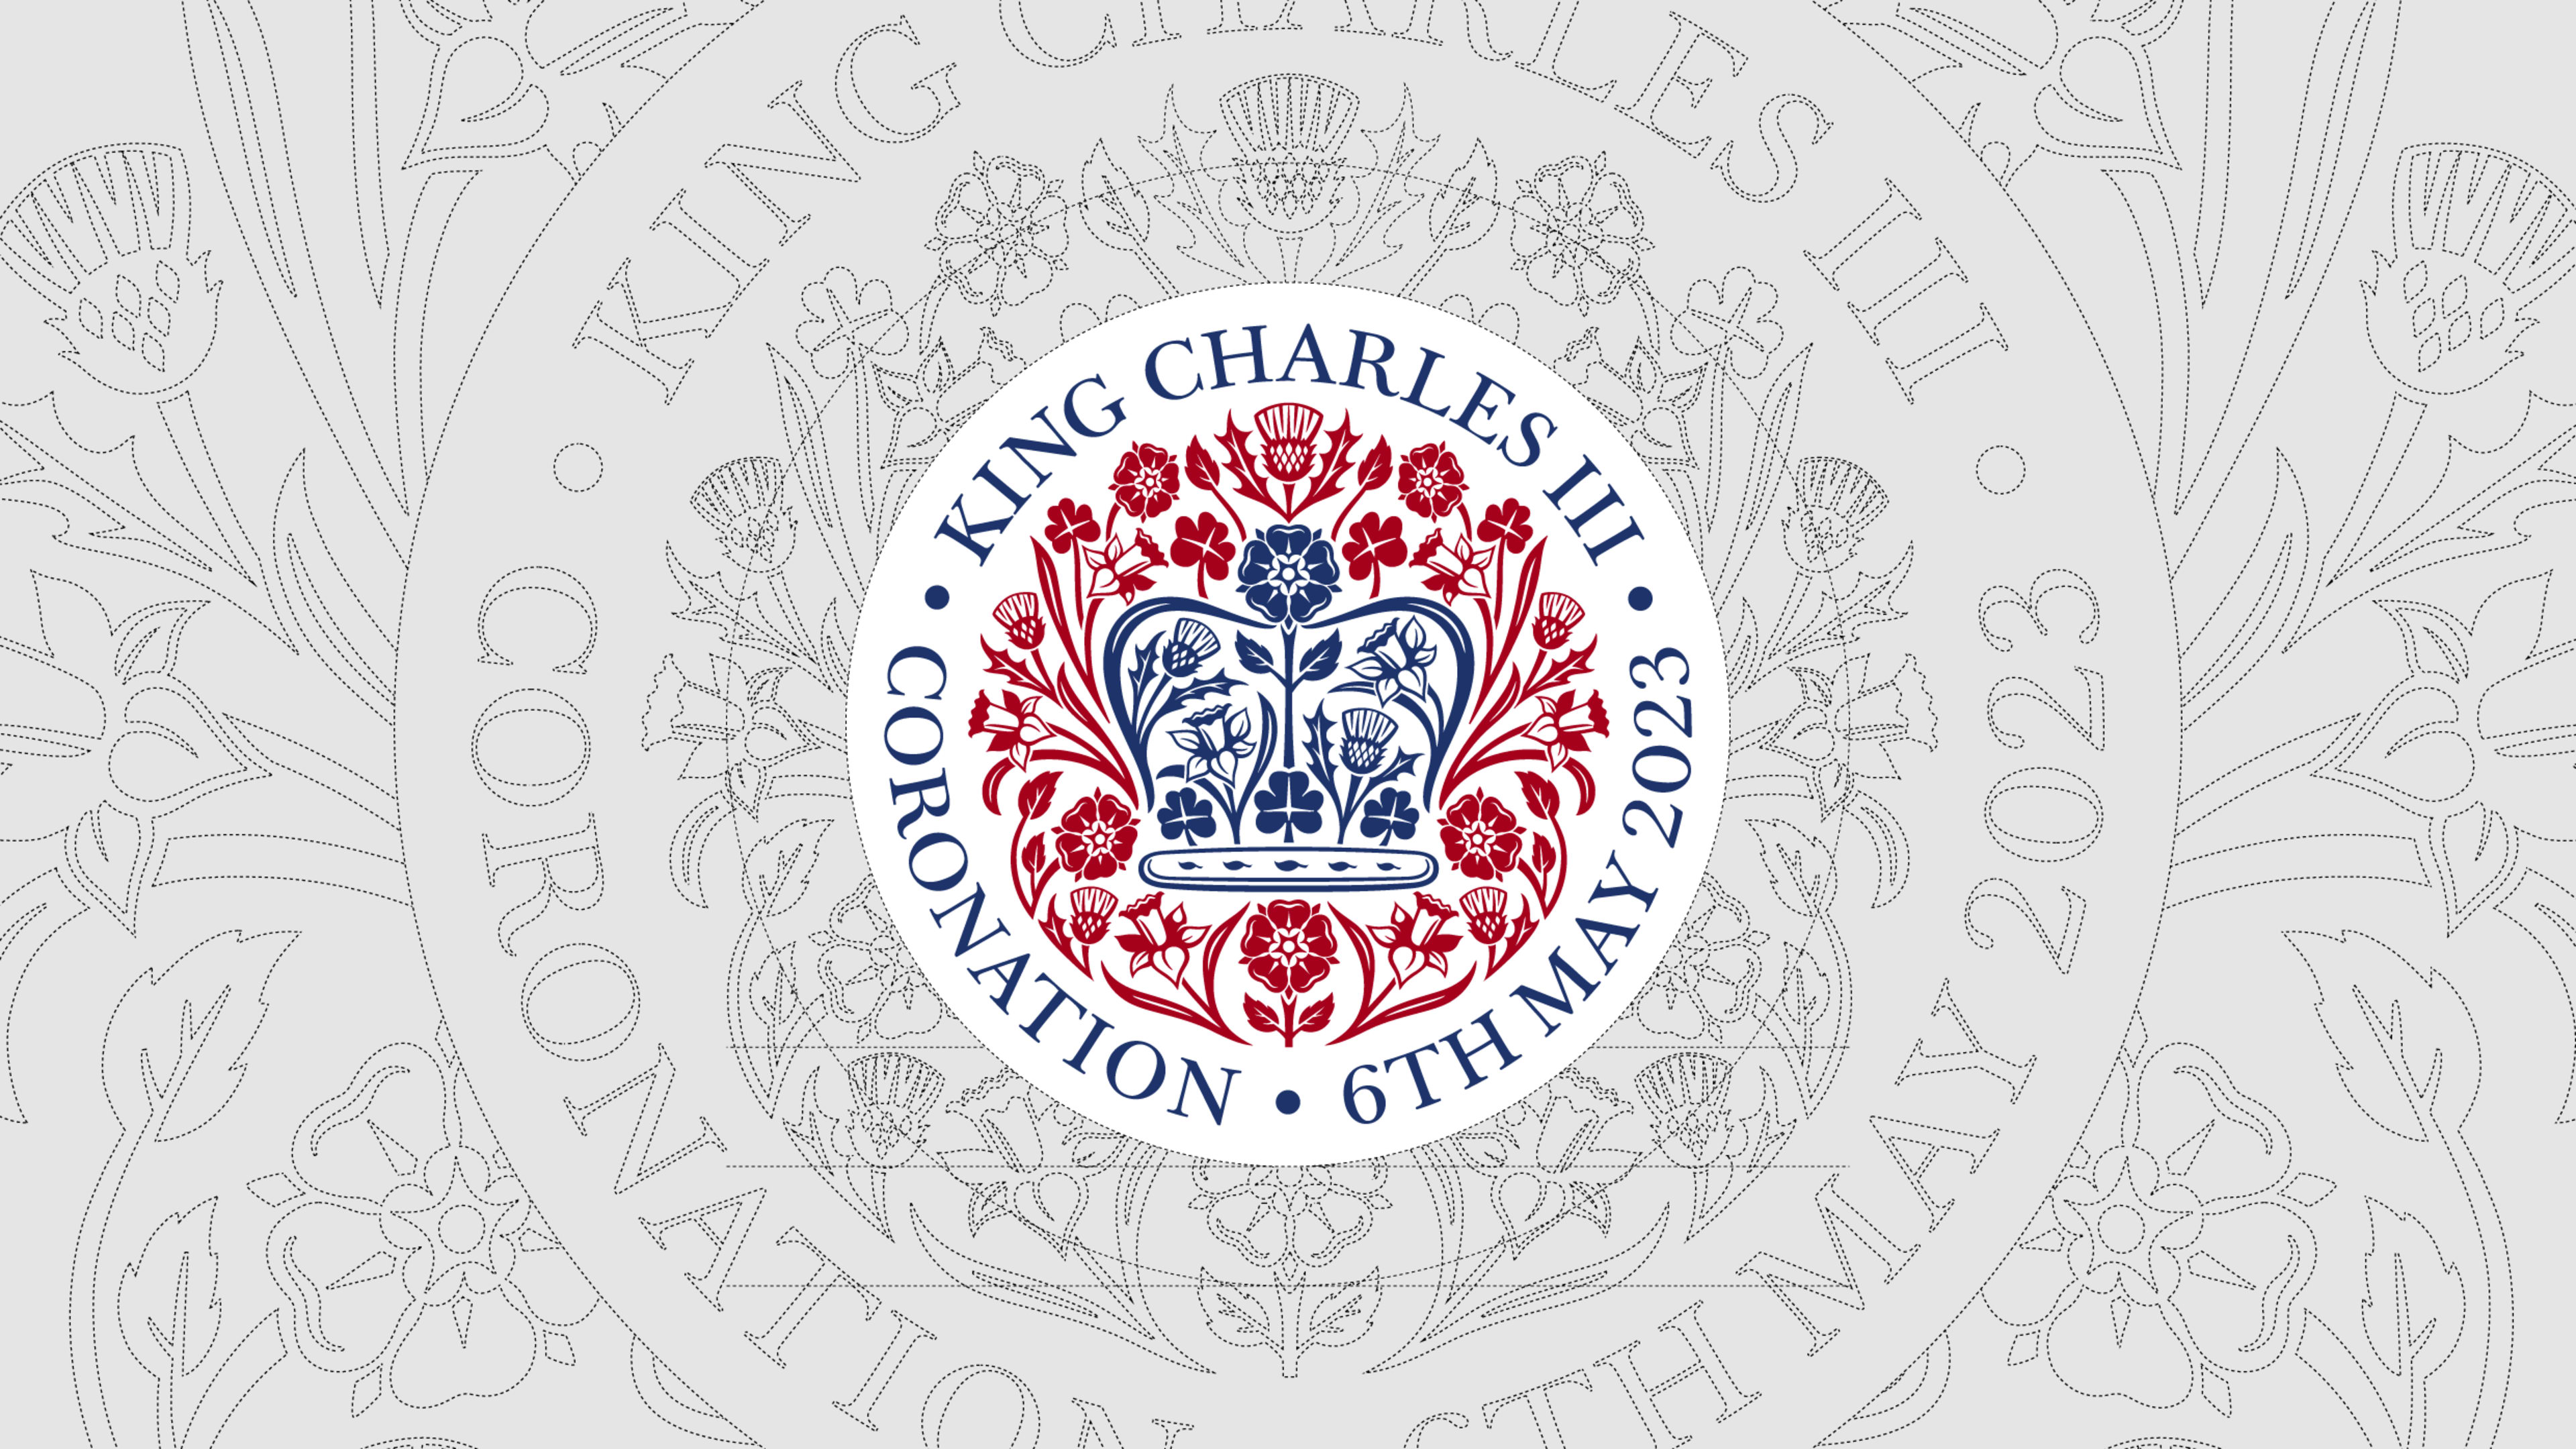 Jony Ive’s emblem for King Charles III’s coronation is pure class